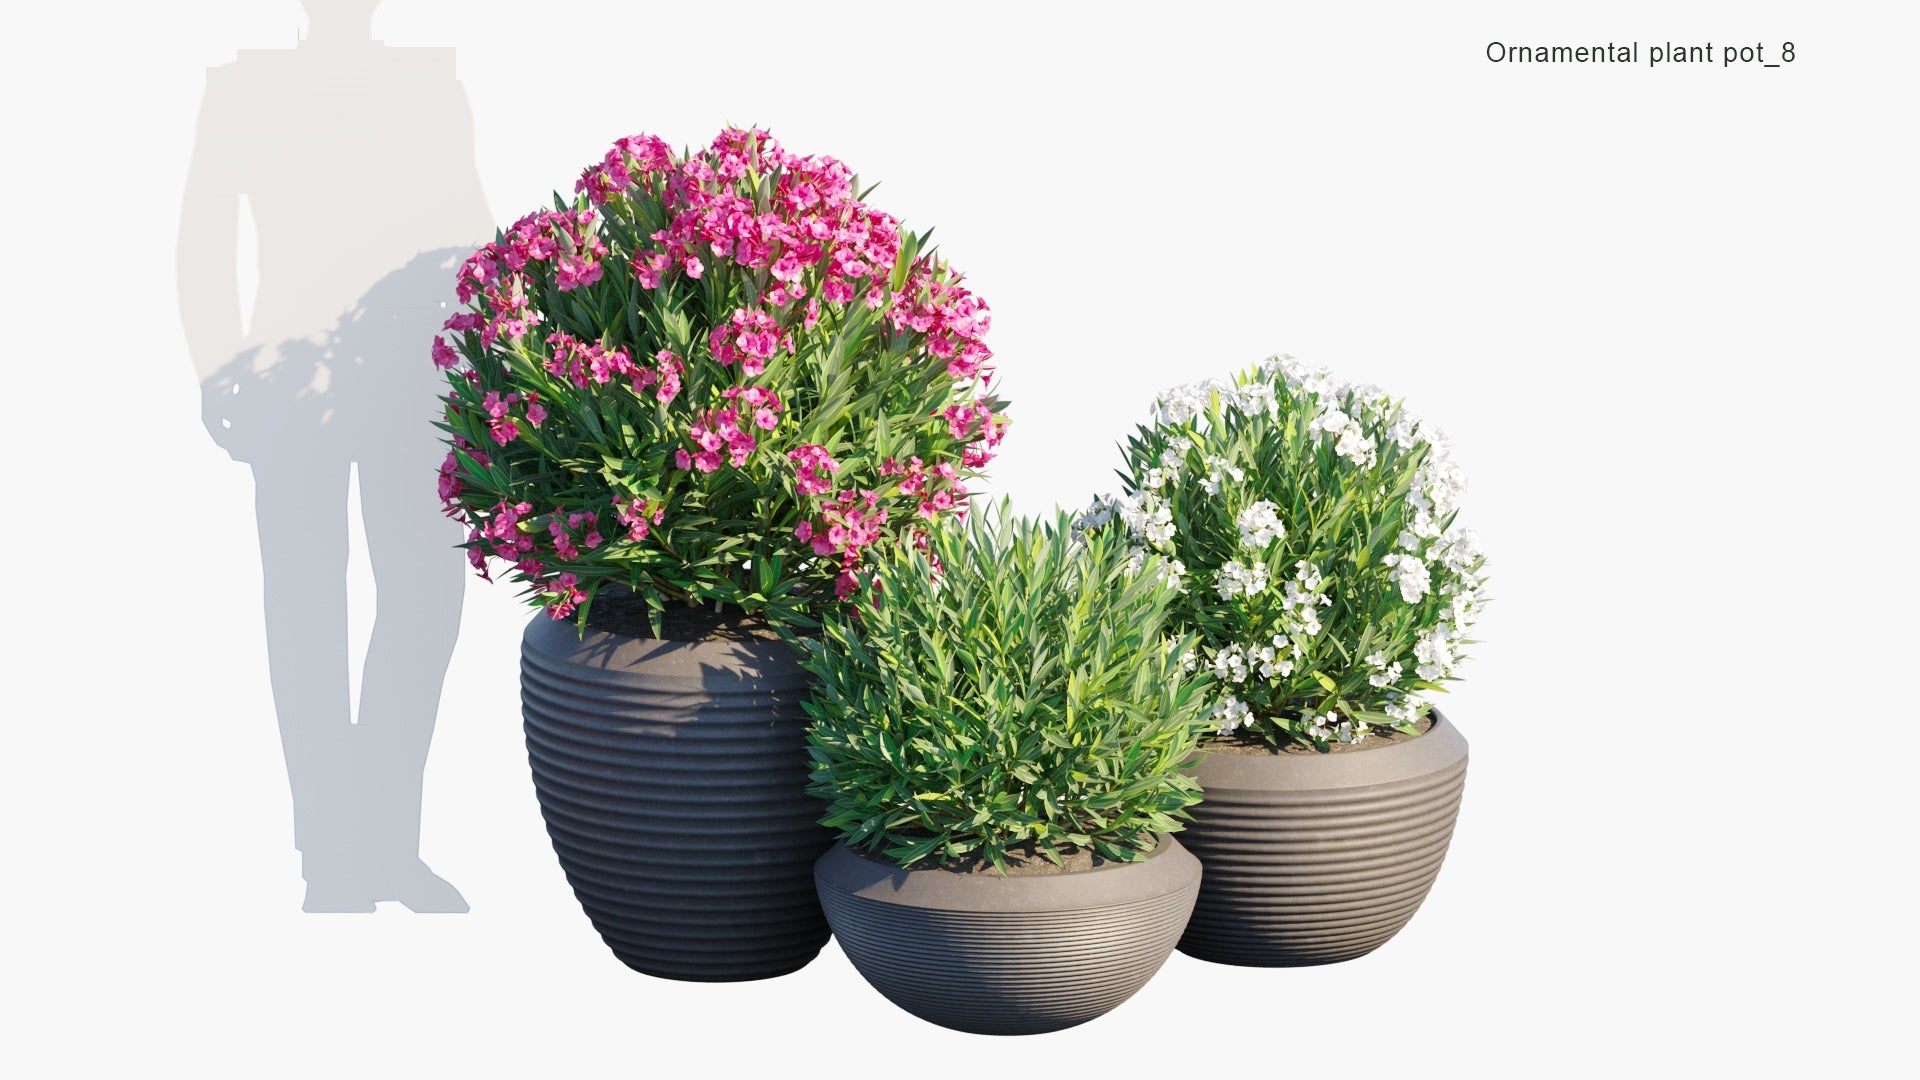 Ornamental Pot Plant 08 - Nerium Oleander (3D Model)